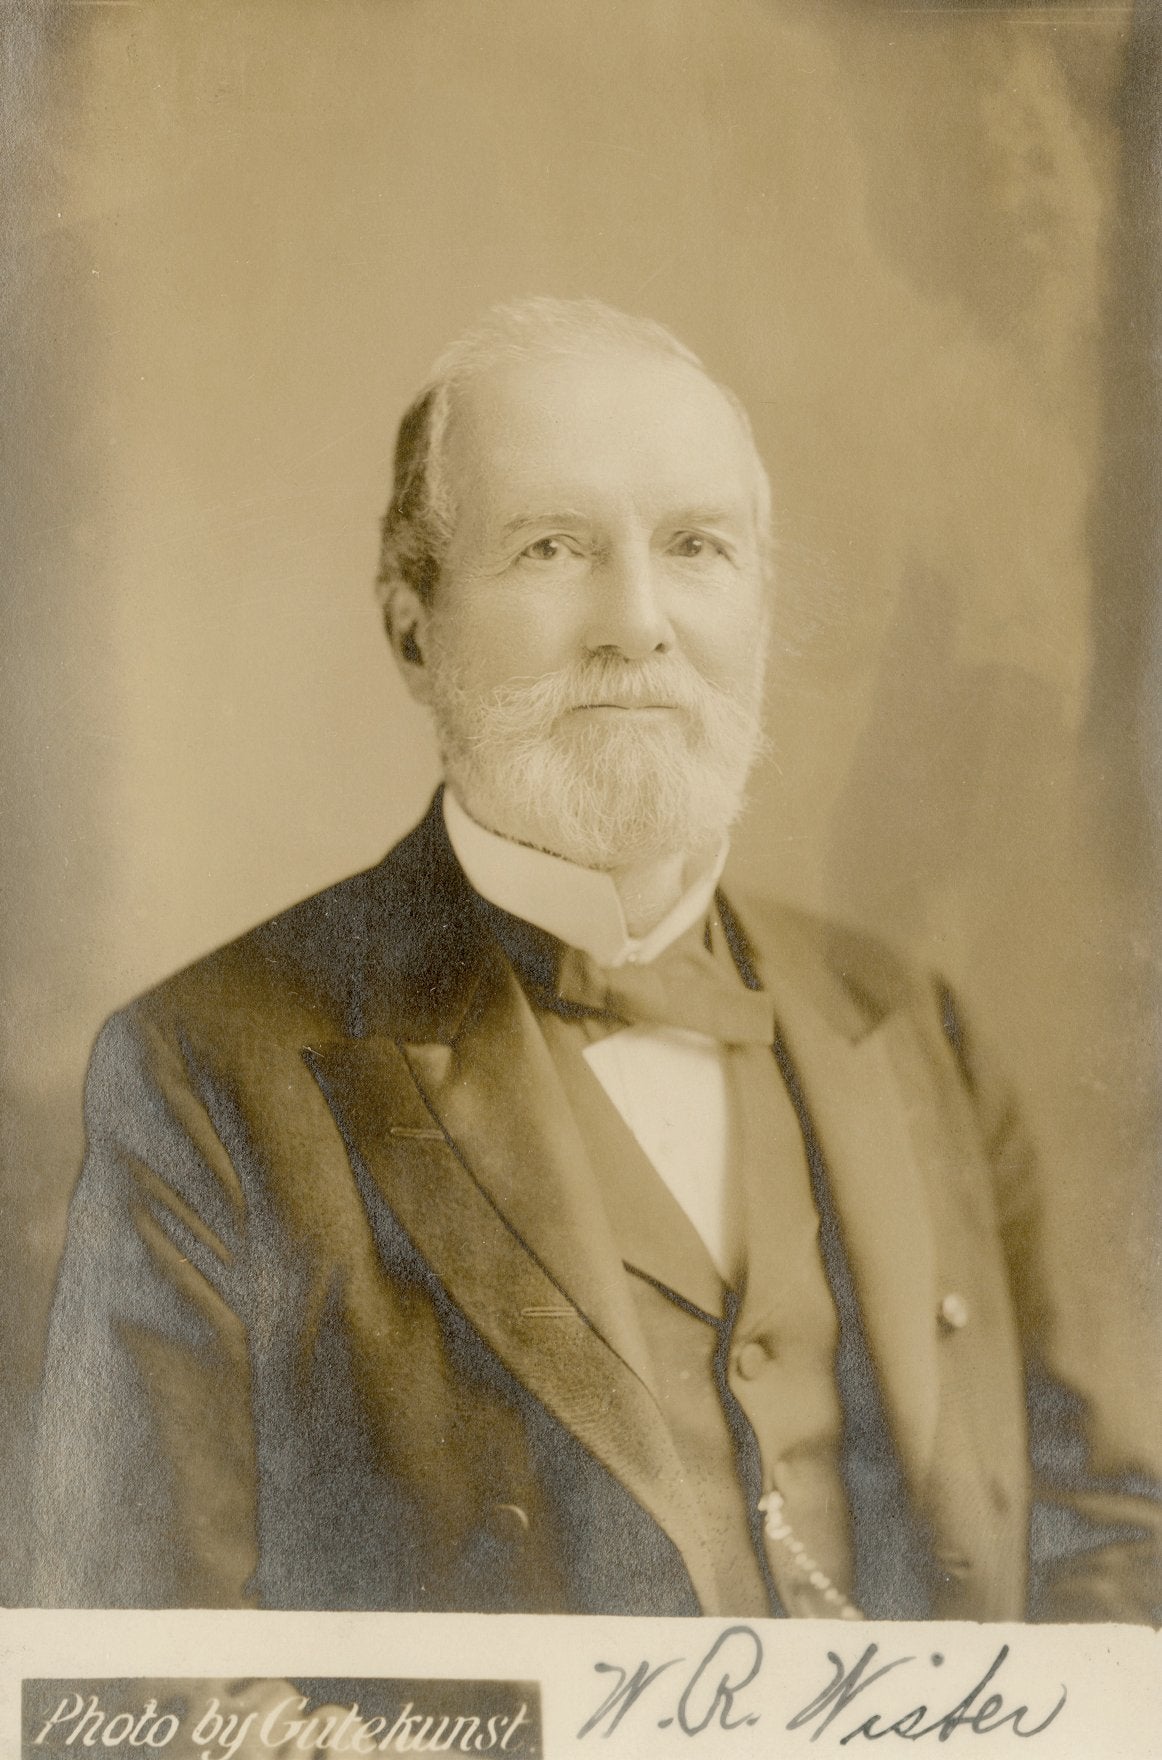 William Rotch Wister, c. 1880